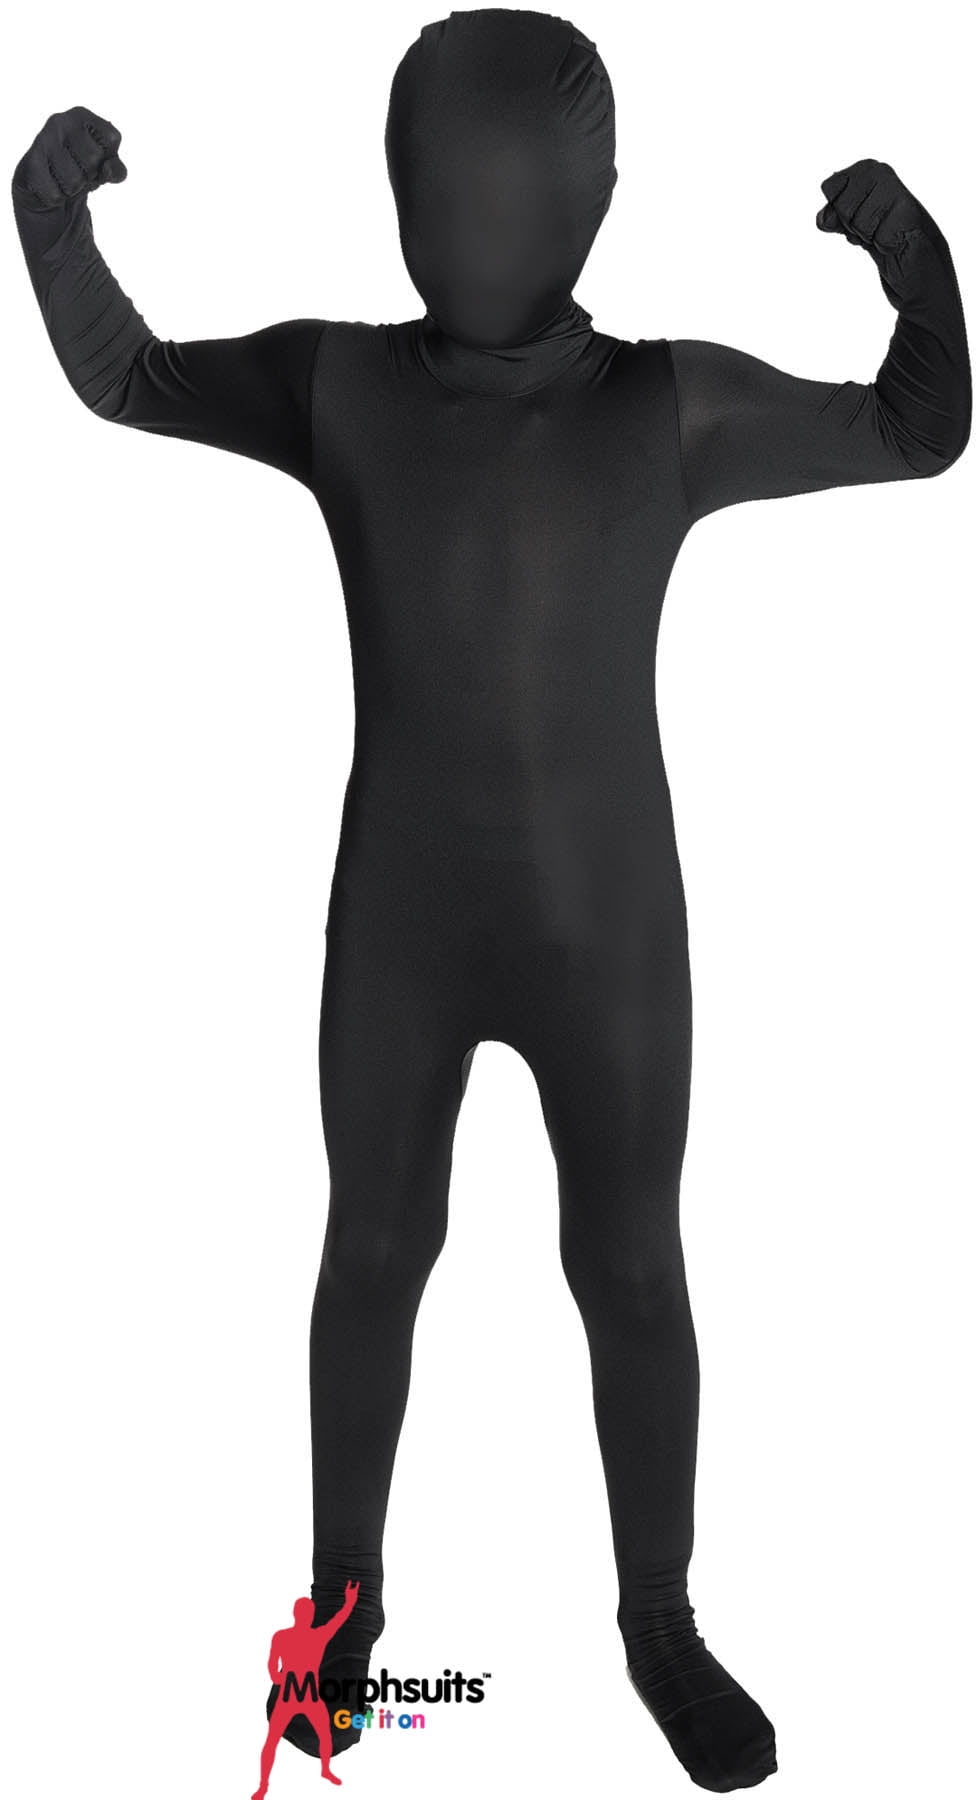 NINJA Morphsuit Original Morph Suit Second Skin Costume Child Size  M L XL 